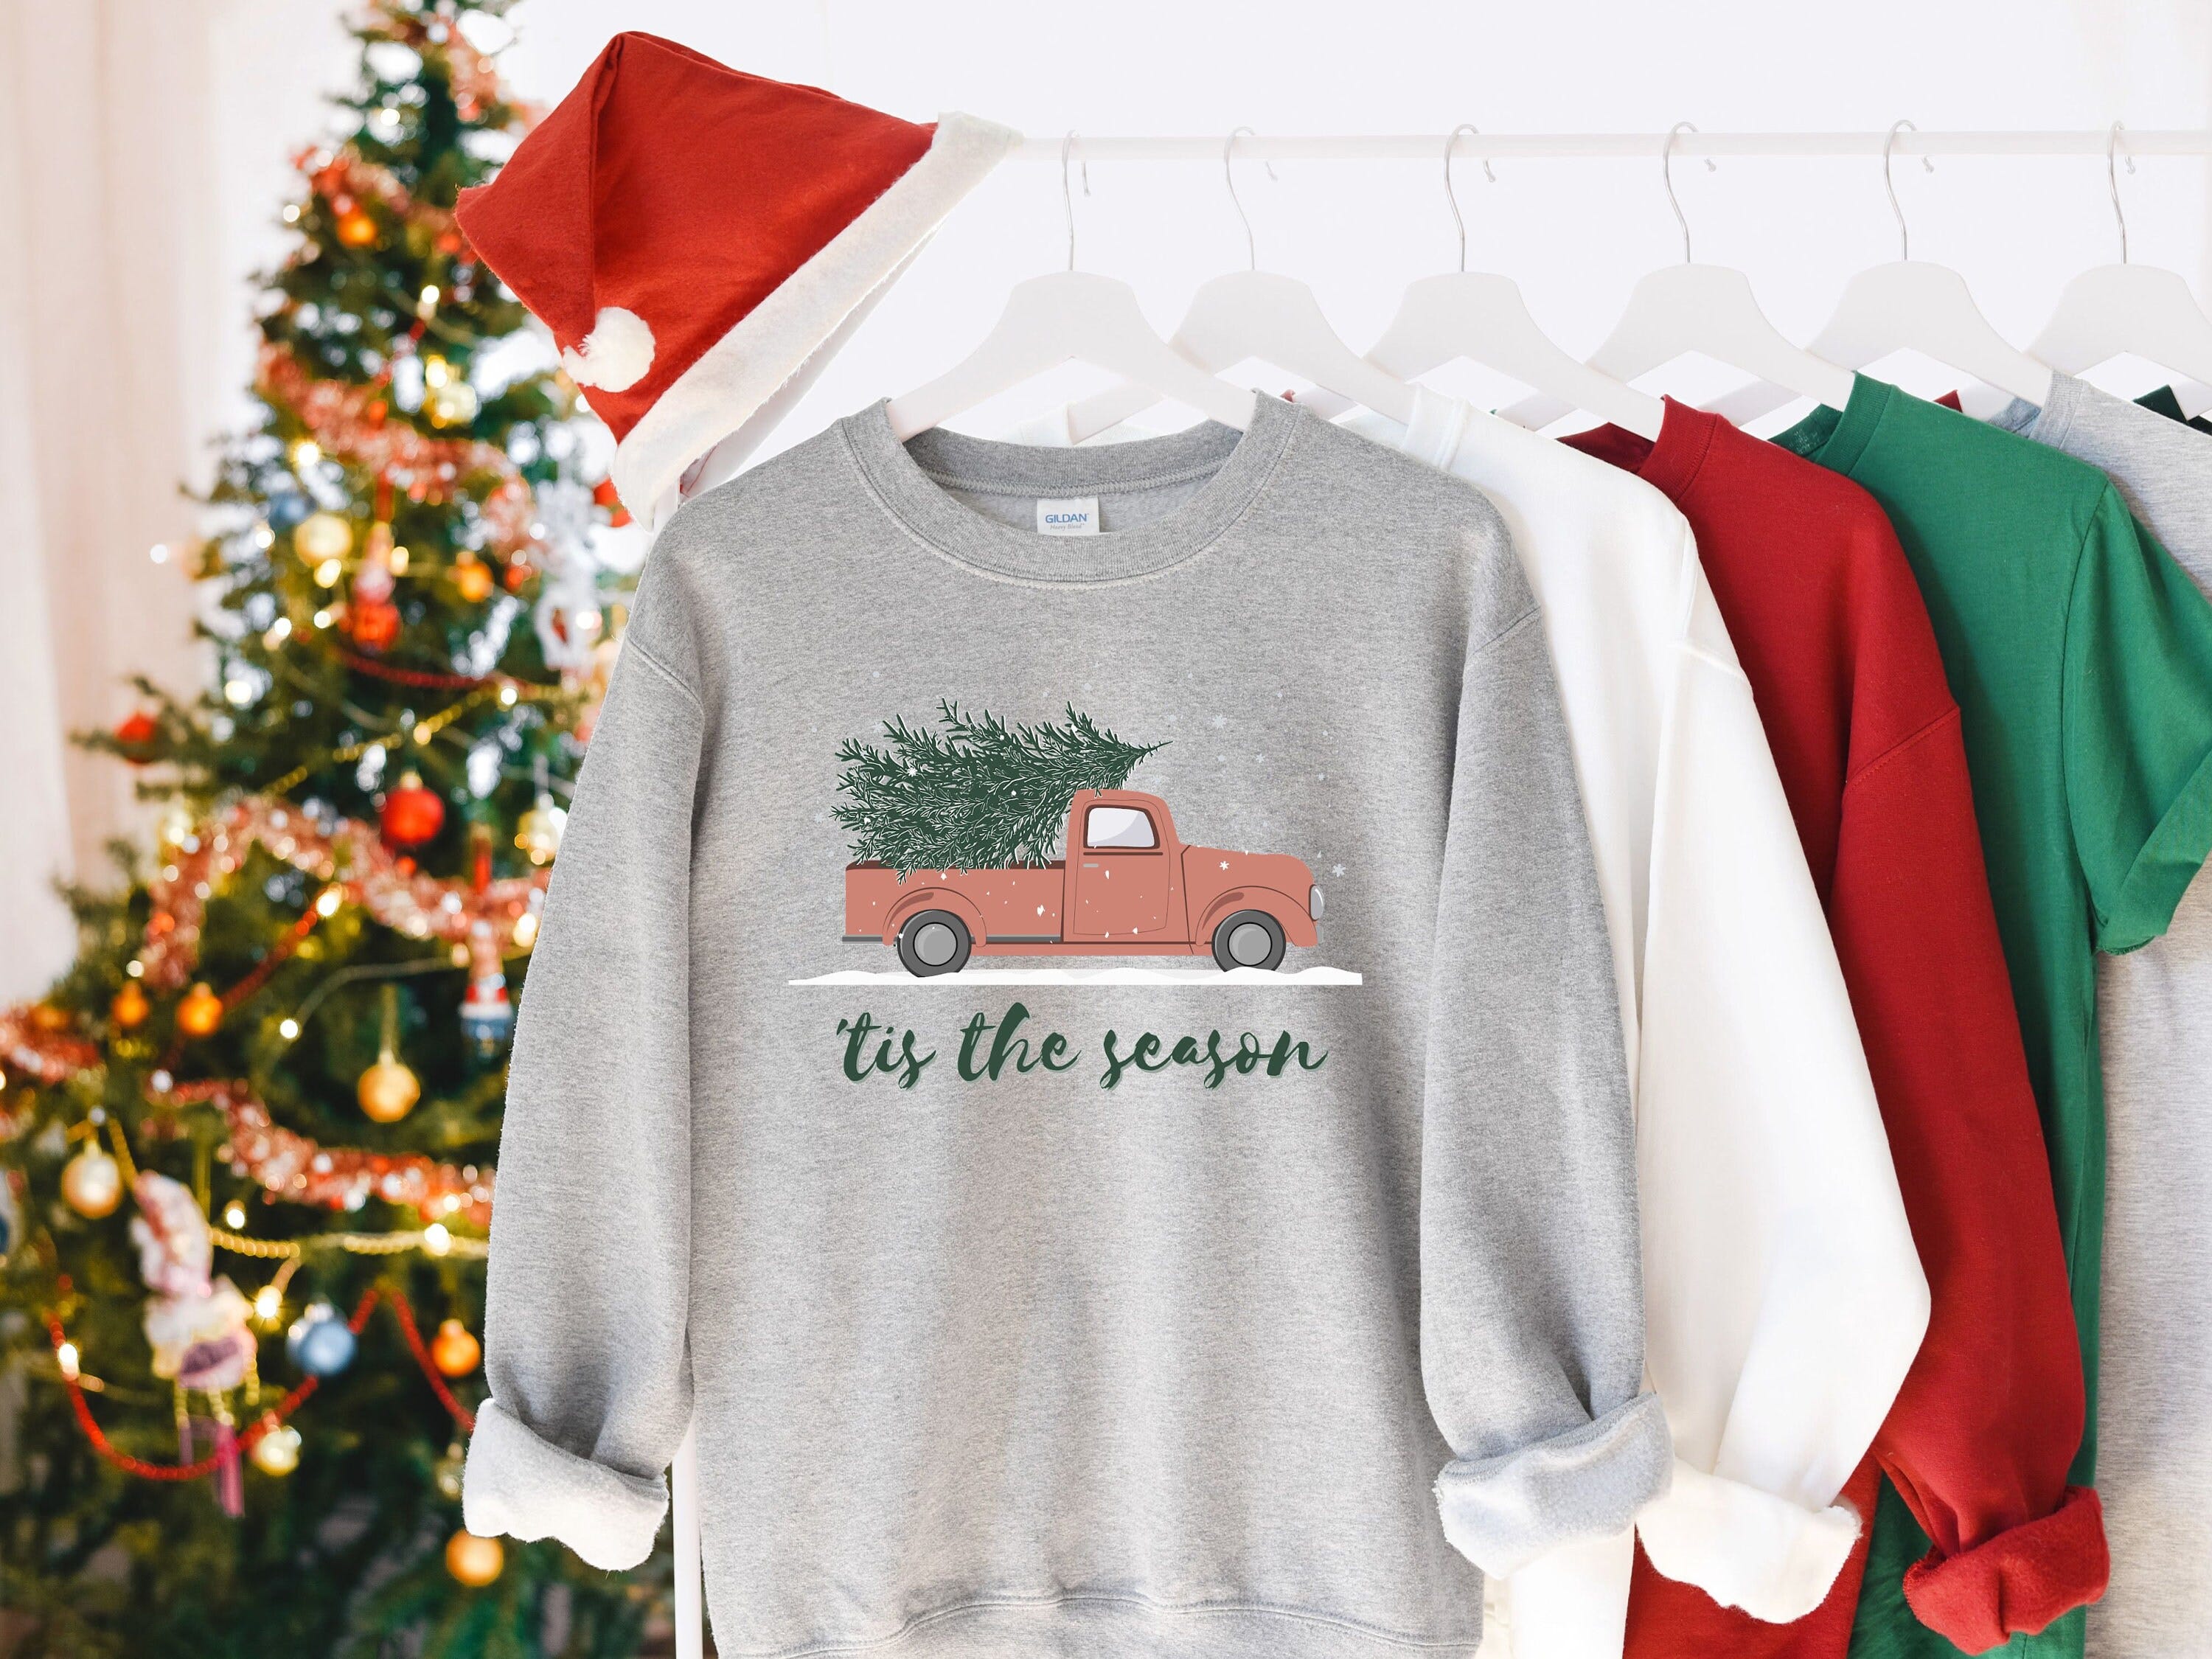 Vintage Red Truck Christmas Sweatshirt, Truck and Christmas Tree Crewneck Sweatshirt, Cute Tis The Season Holiday Sweater Pullover Gift